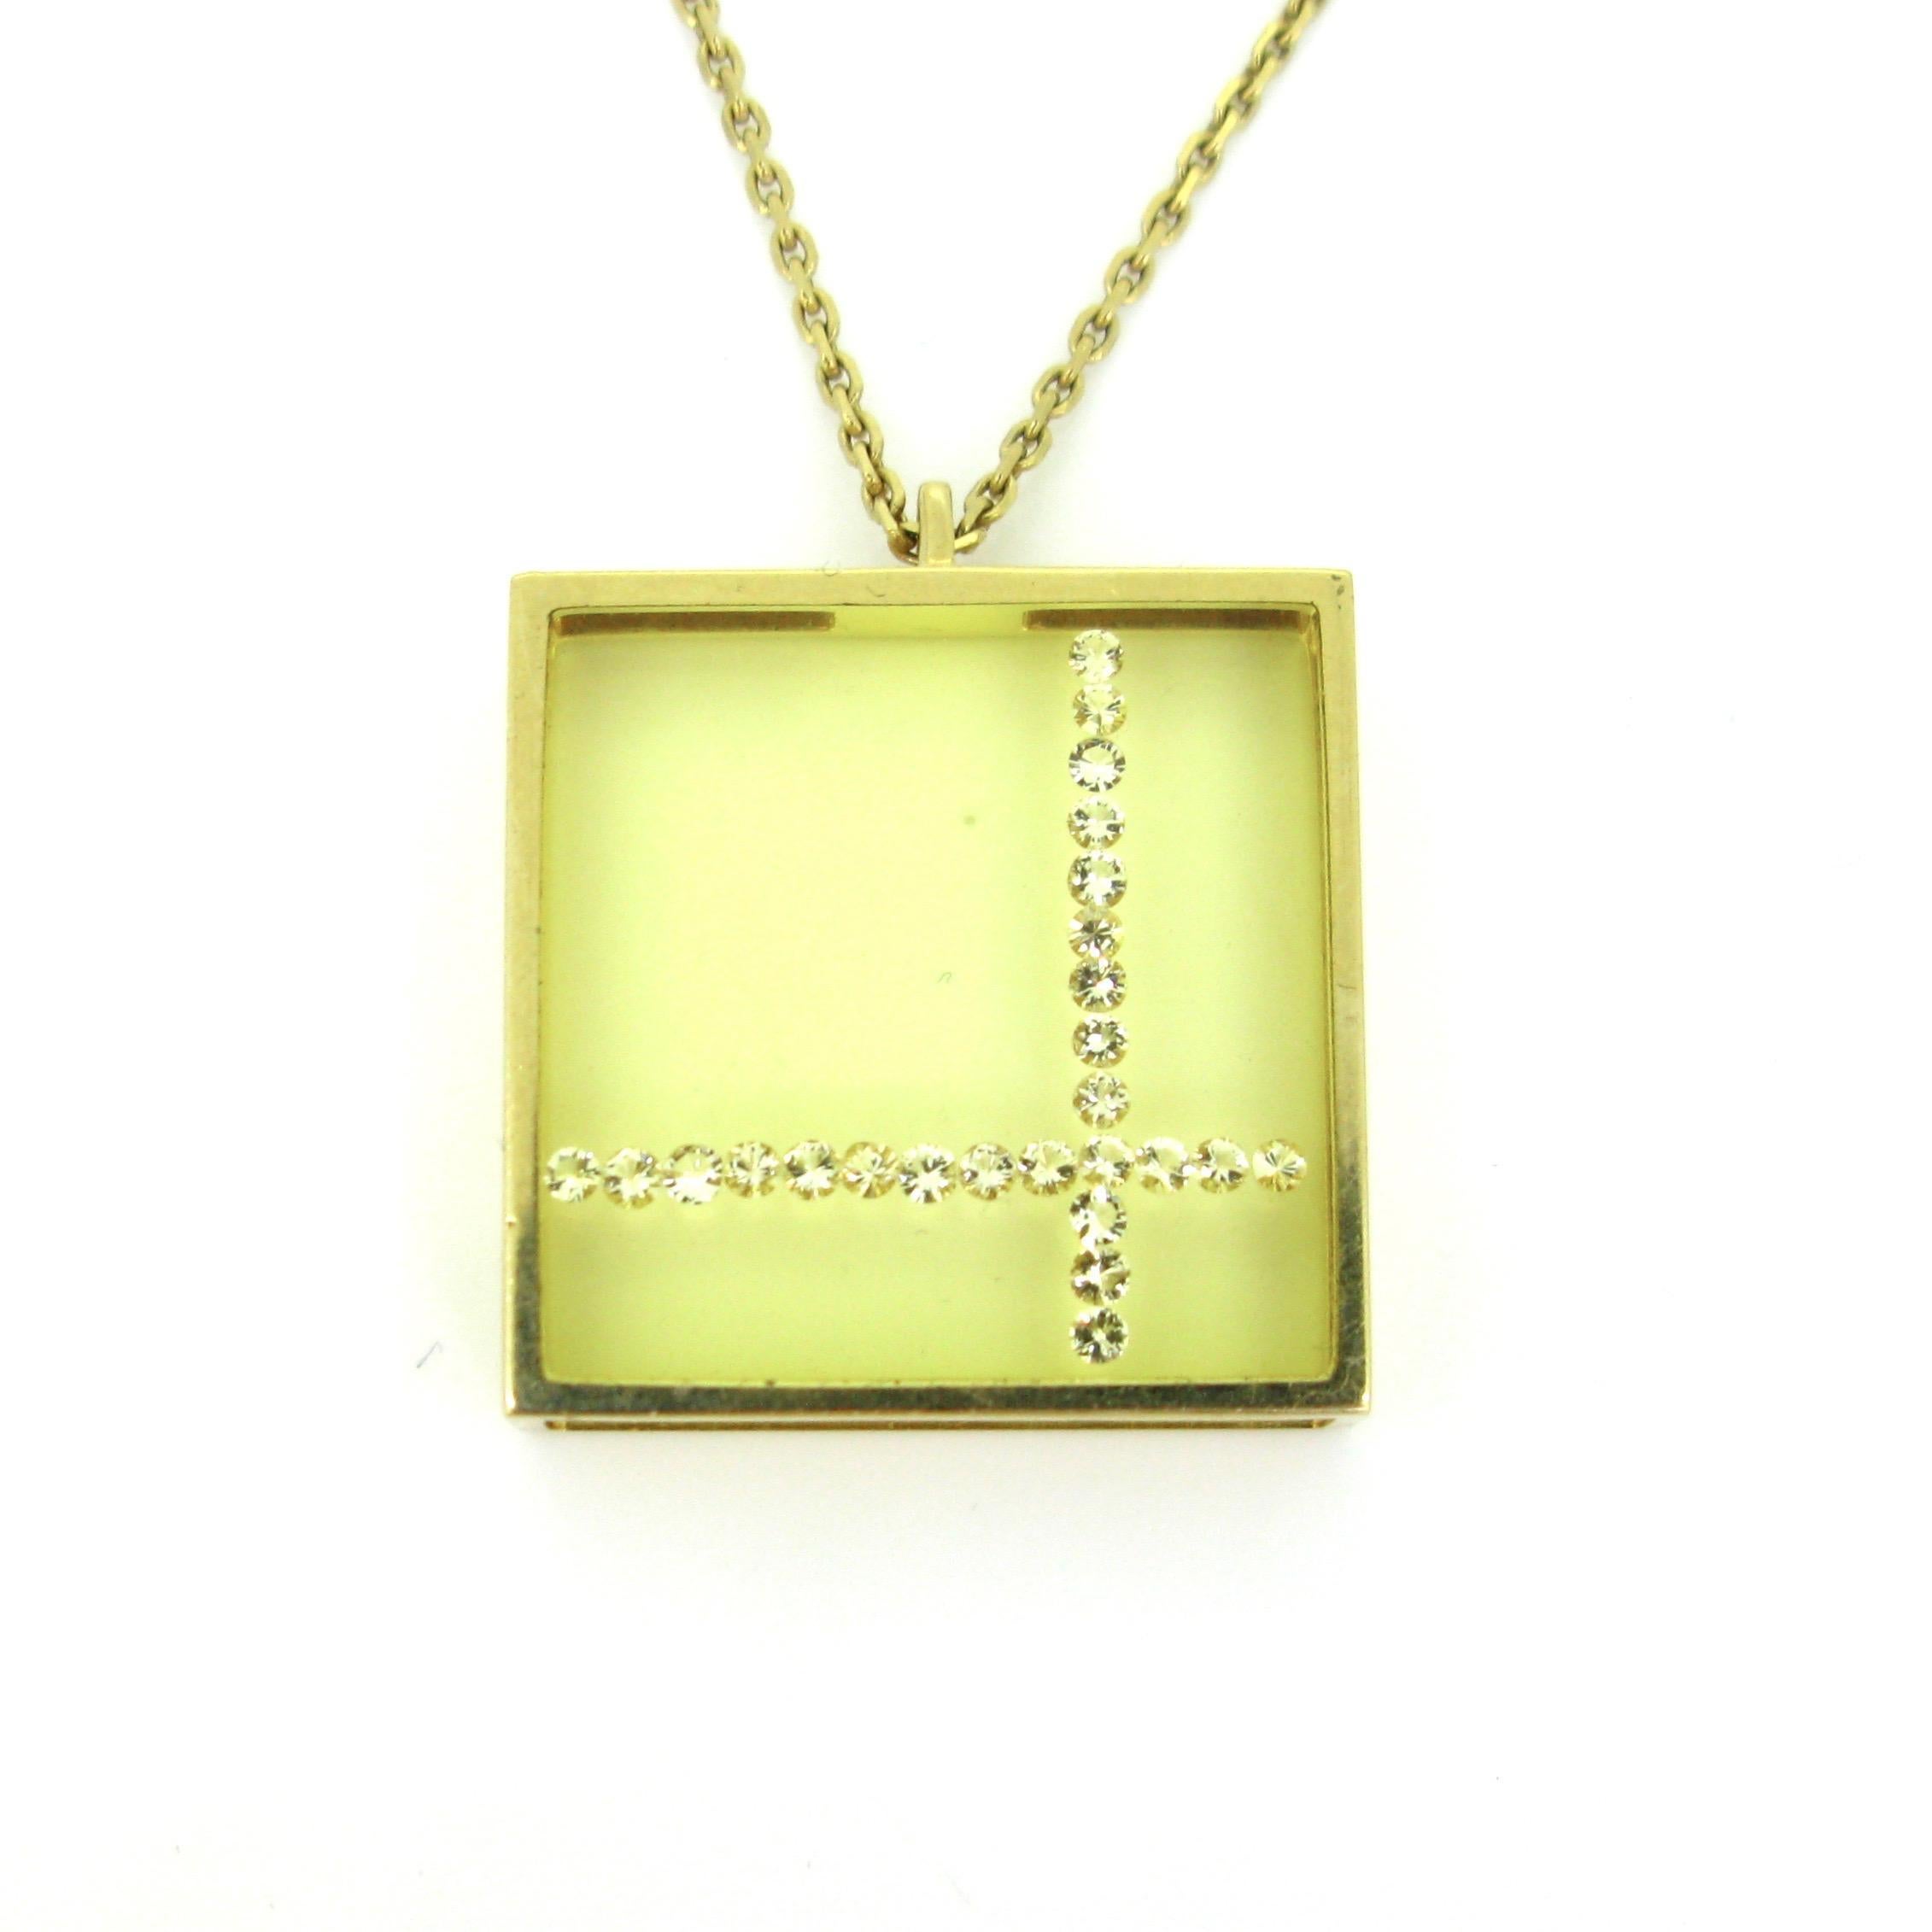 Morabito Modernist Rectangular Diamonds Pendant on Chain, 18 Karat Gold, circ 1